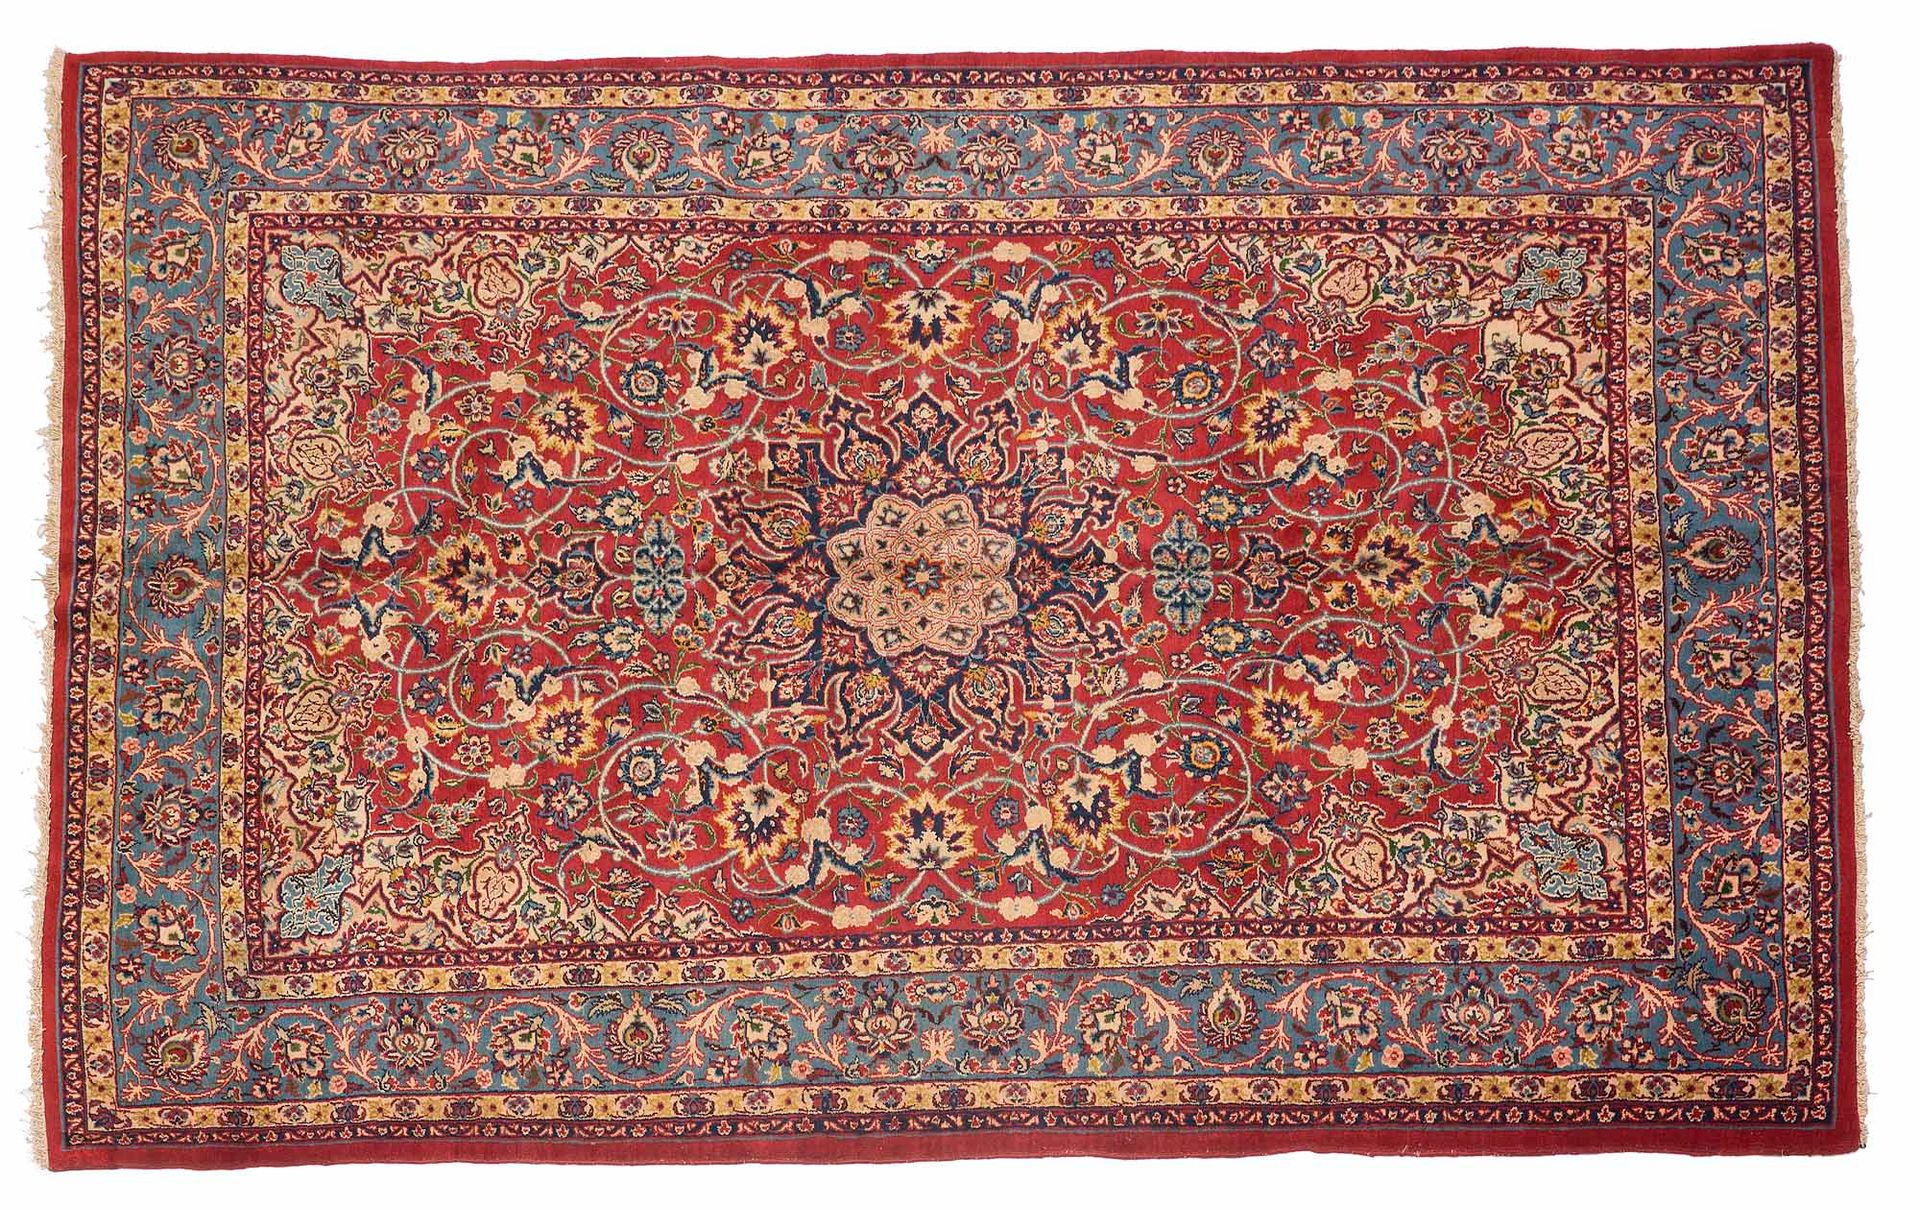 Null ISPAHAN carpet (Iran), Shah's era, mid 20th century

Dimensions : 288 x 195&hellip;